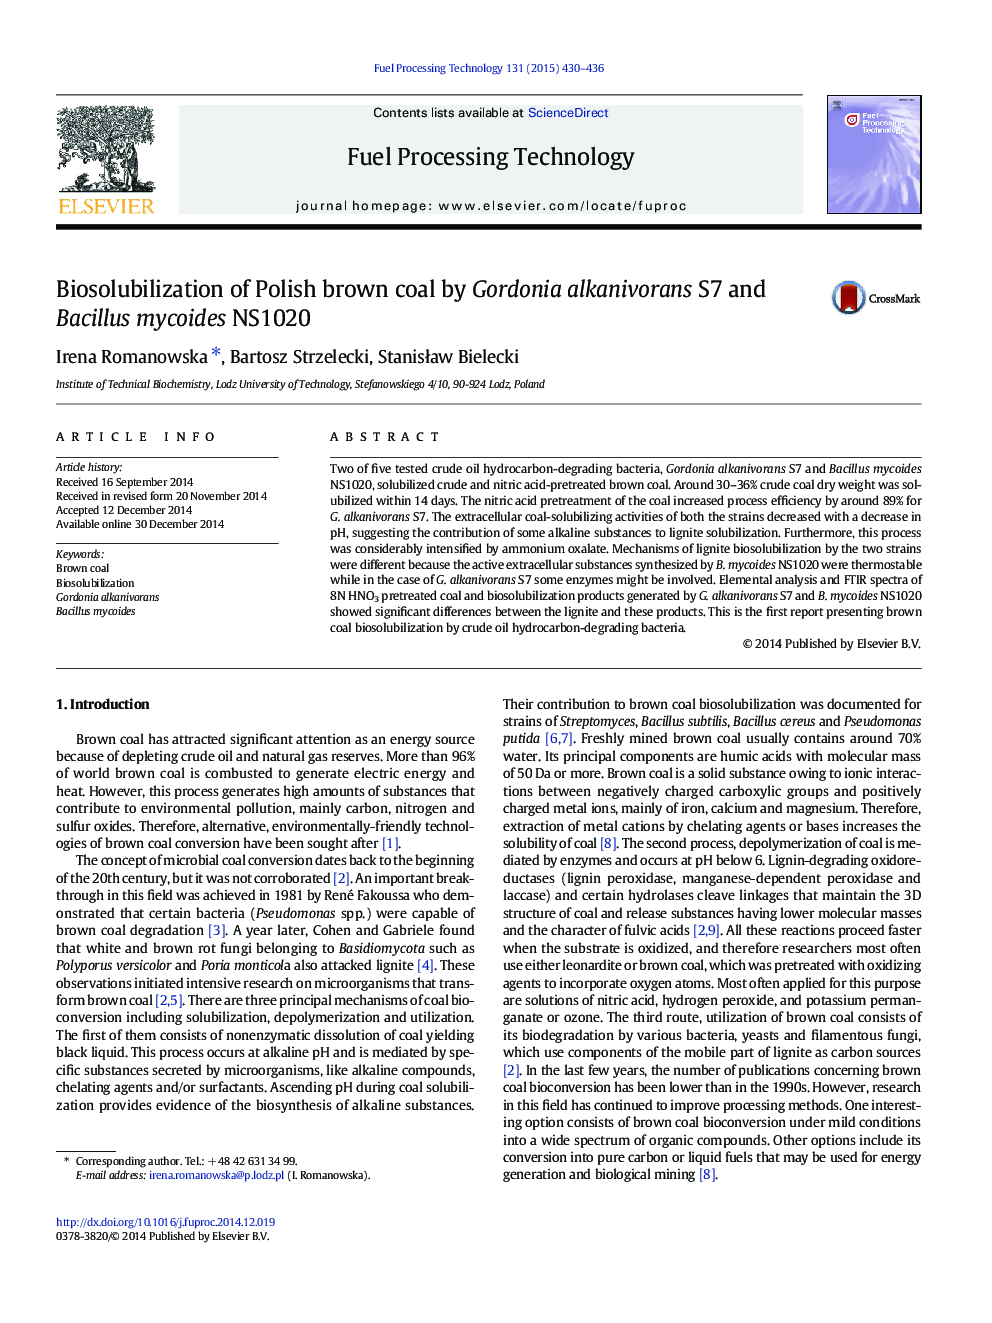 Biosolubilization of Polish brown coal by Gordonia alkanivorans S7 and Bacillus mycoides NS1020